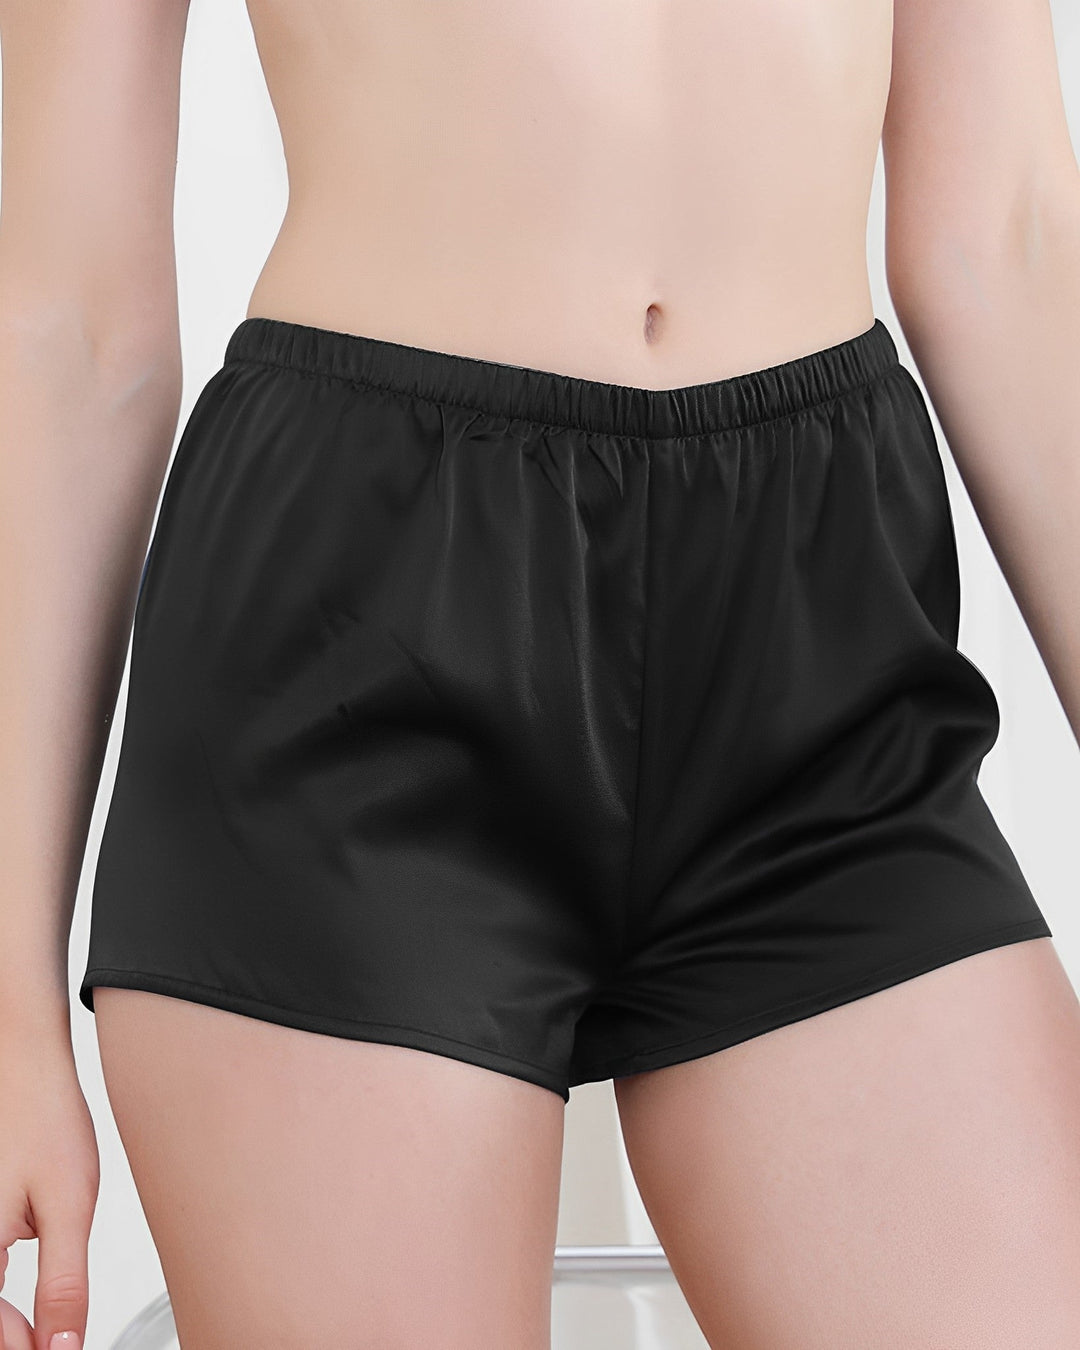 100% Mulberry Silk Panties for Women - Shorts Boxers – SusanSilk